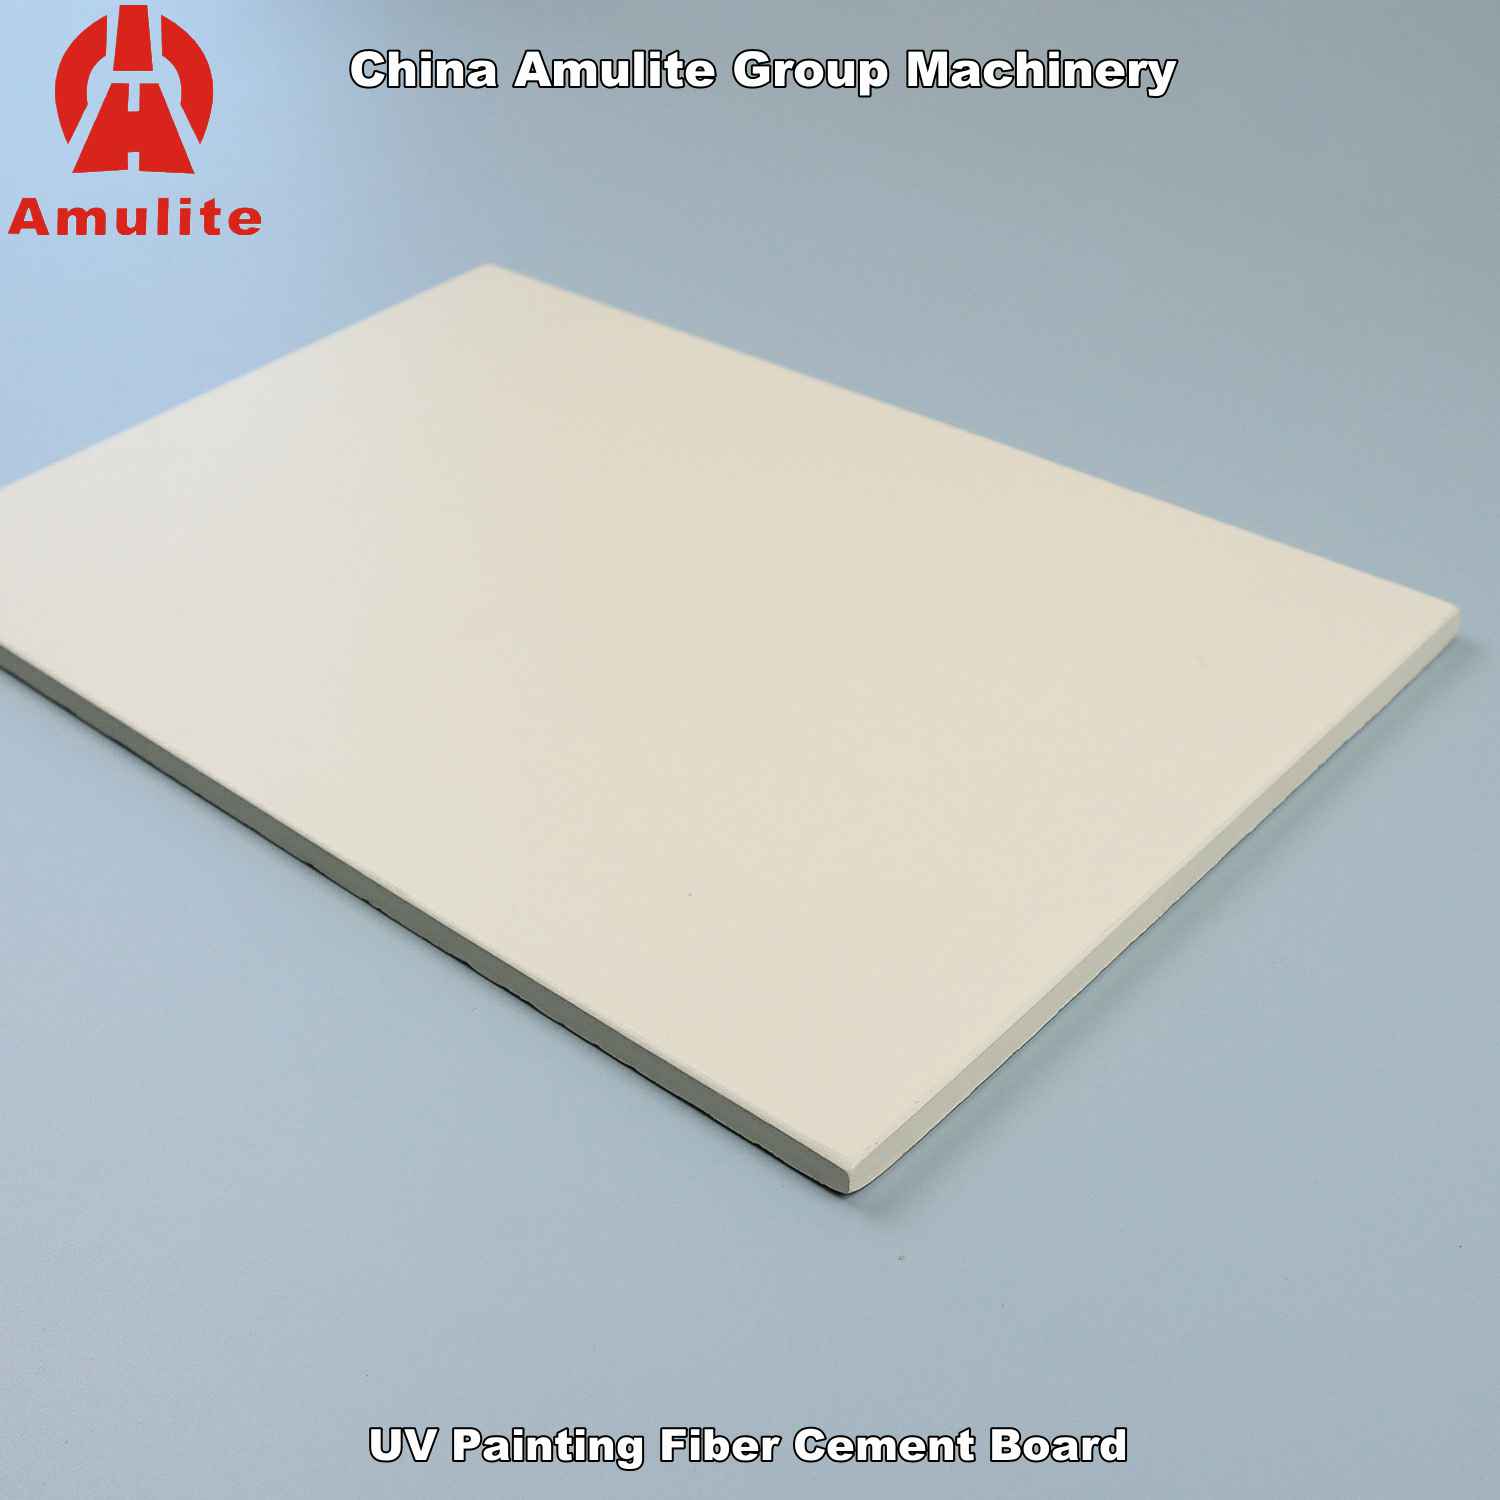 UV Painting Fiber Cement Board (12)